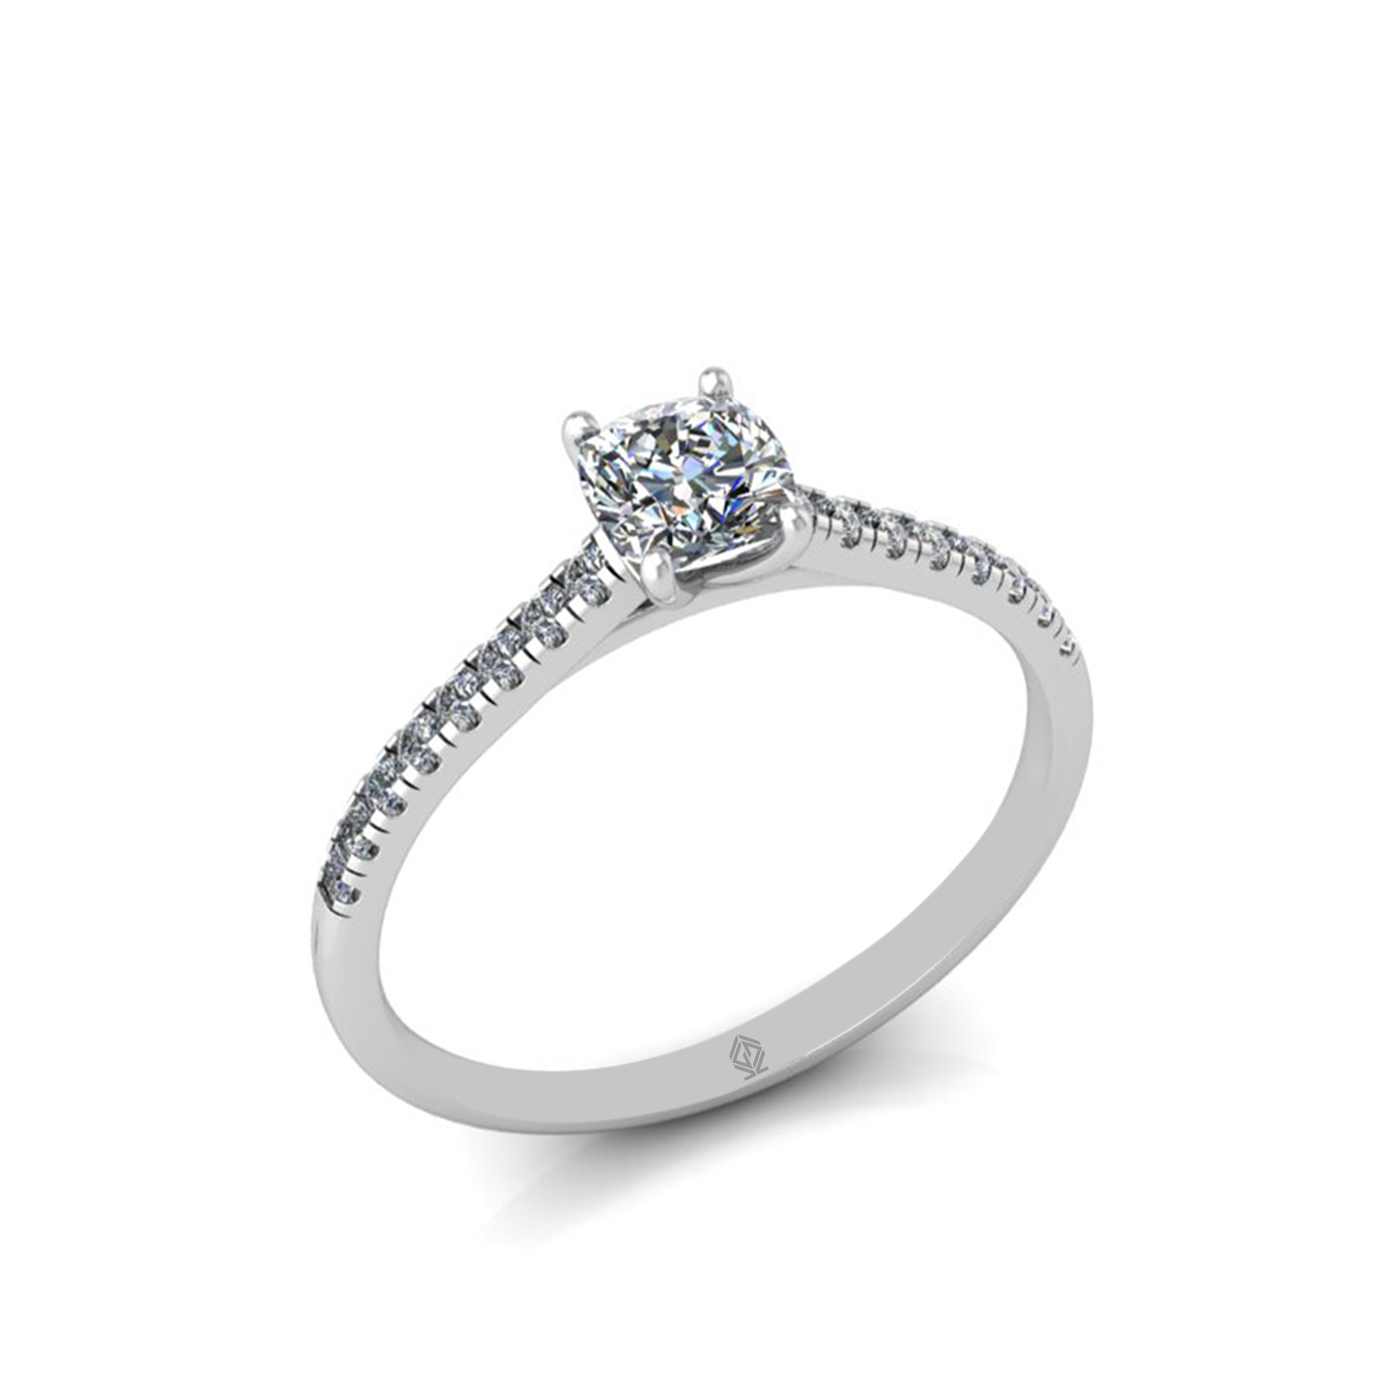 18k white gold 0,50 ct 4 prongs cushion cut diamond engagement ring with whisper thin pavÉ set band